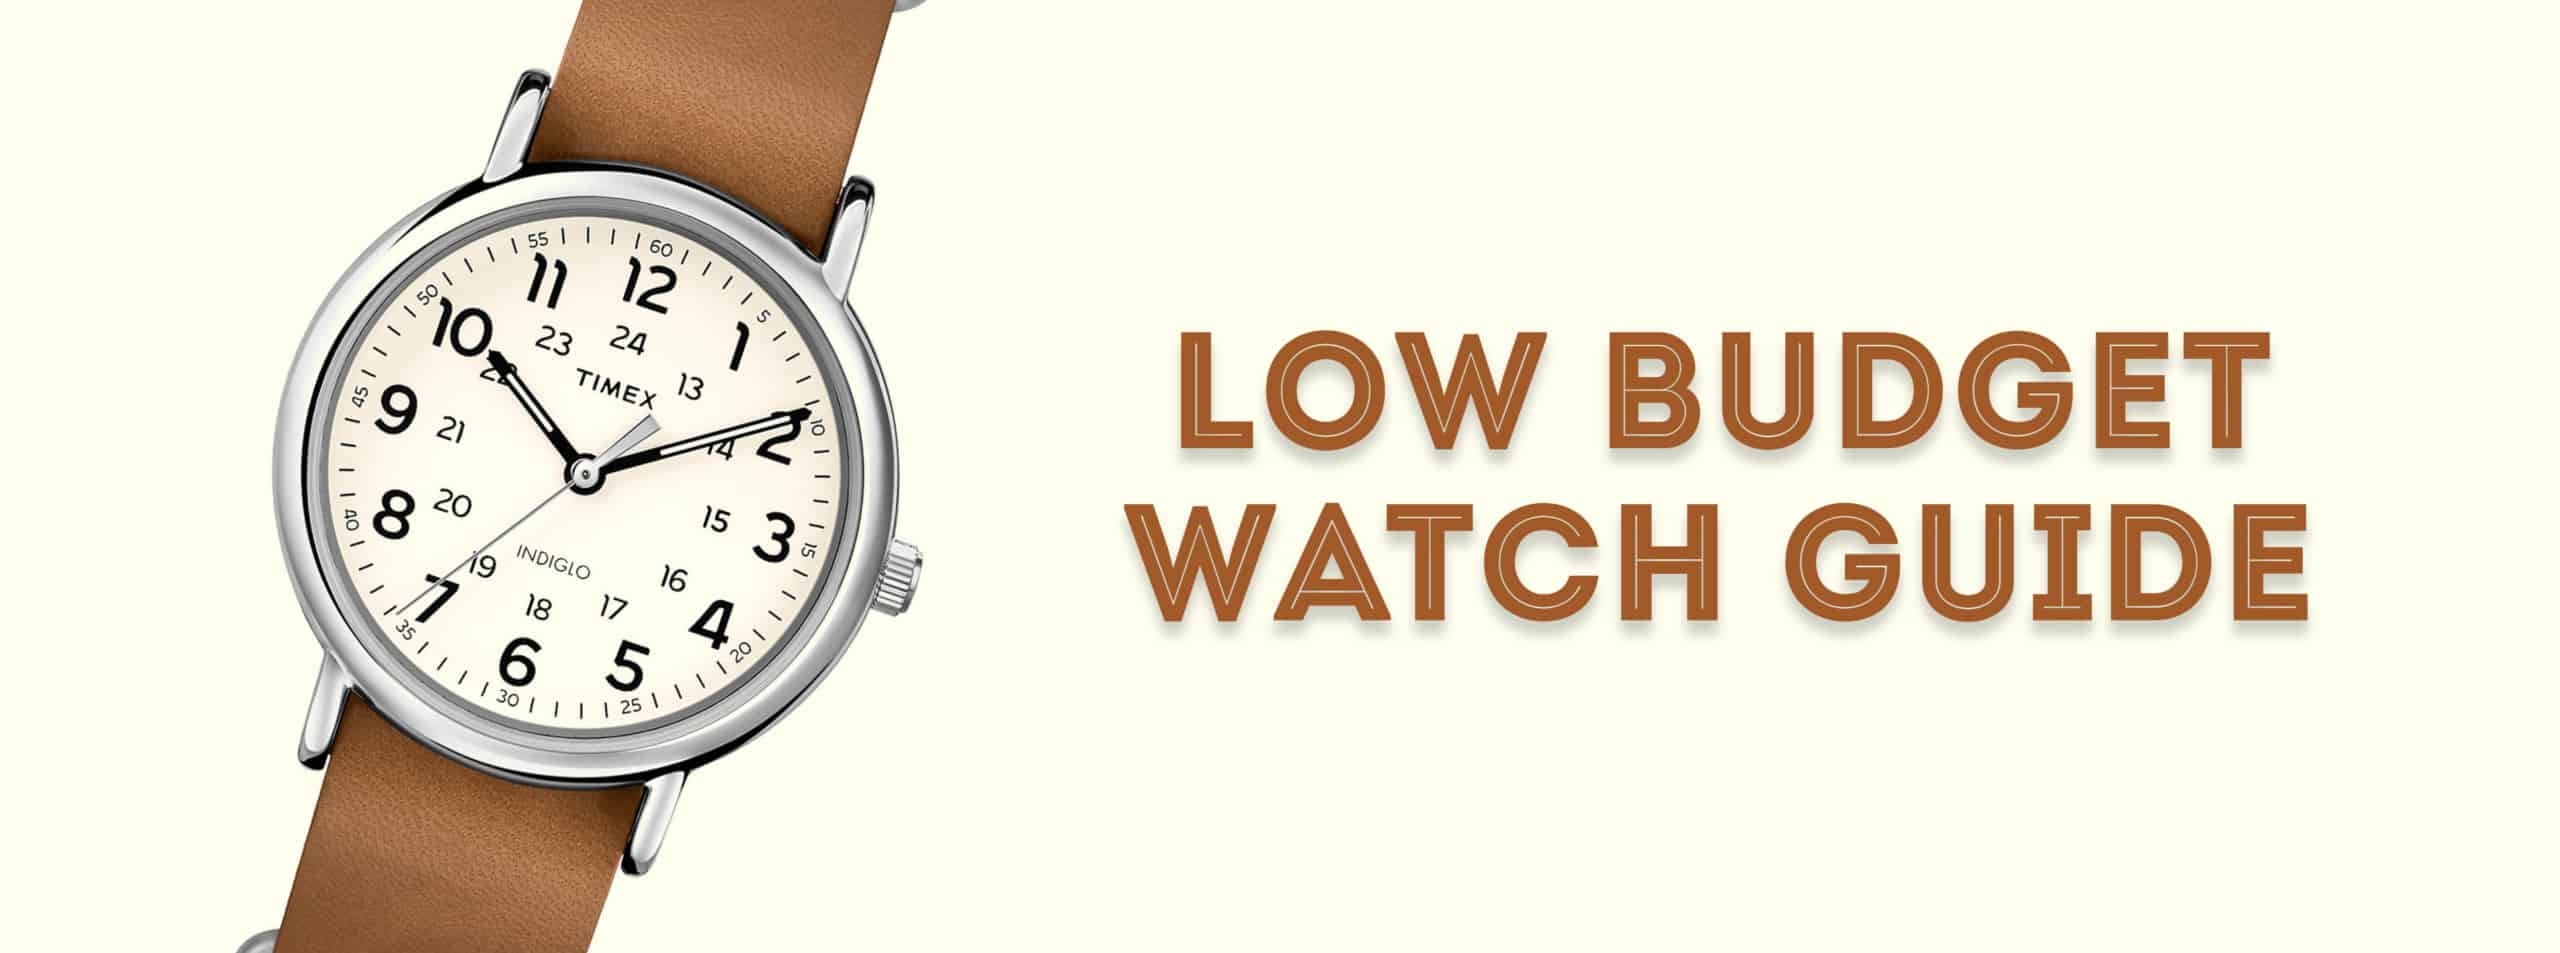 Low Budget Watch Guide - Gentlemen's Watches For Under $1000